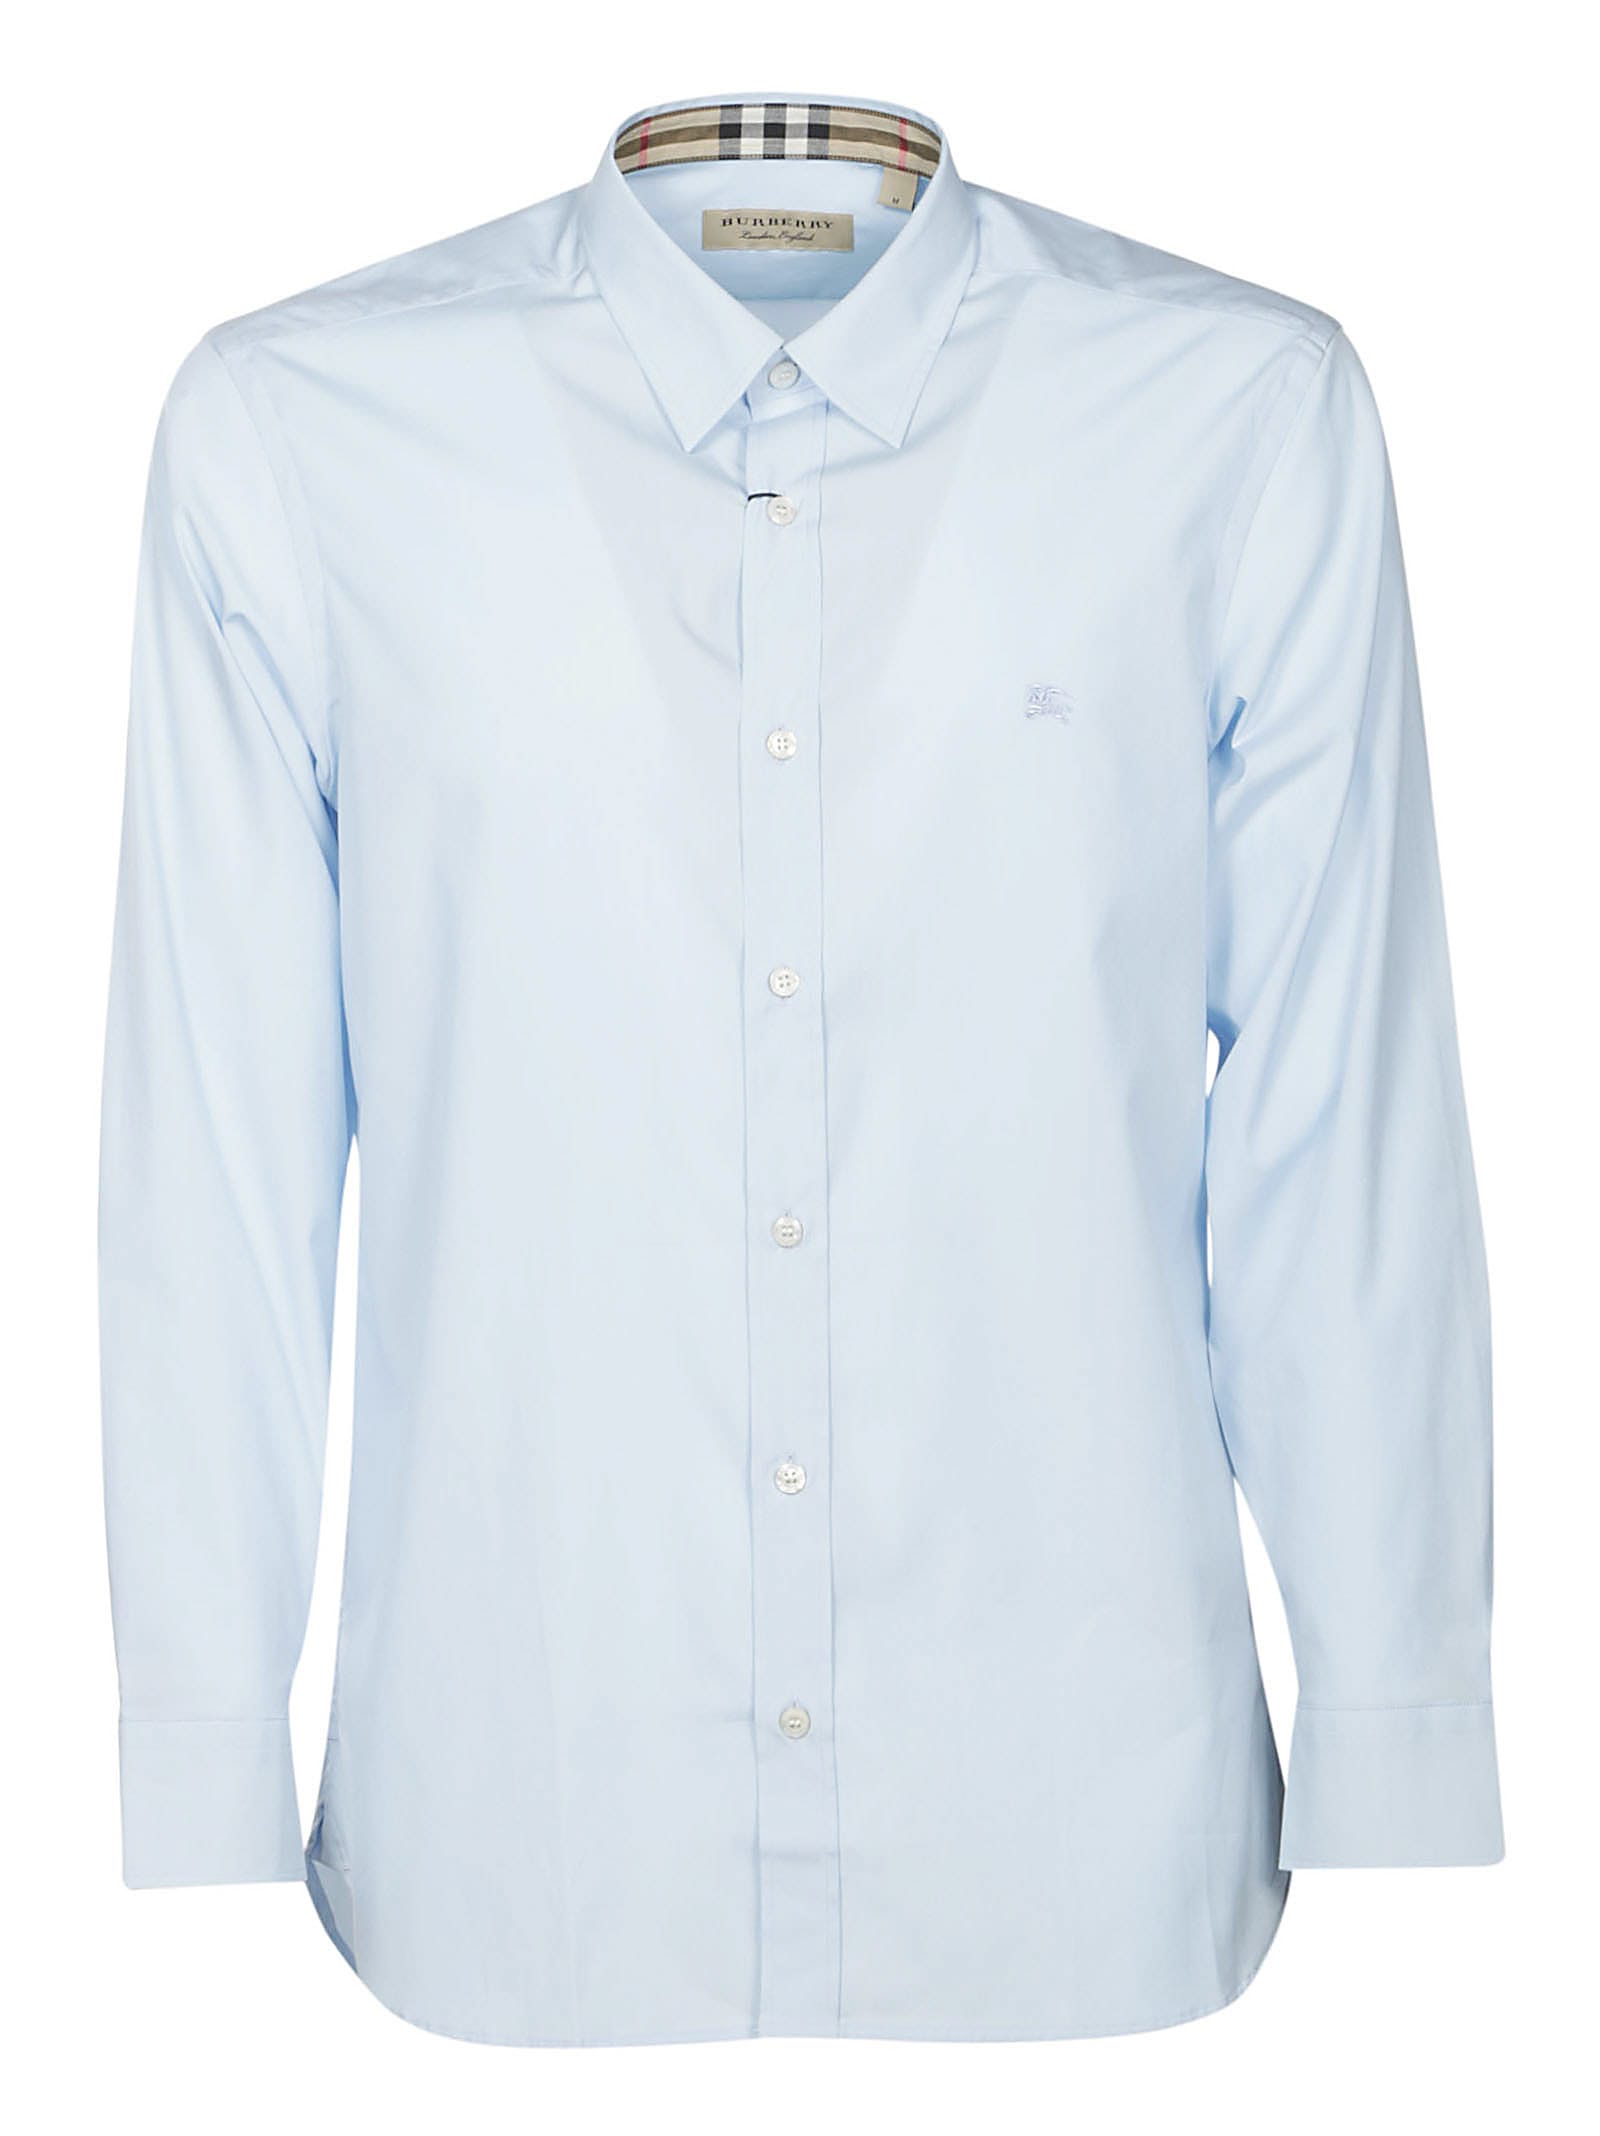 Burberry Blue Shirt Flash Sales, 56% OFF | www.ingeniovirtual.com